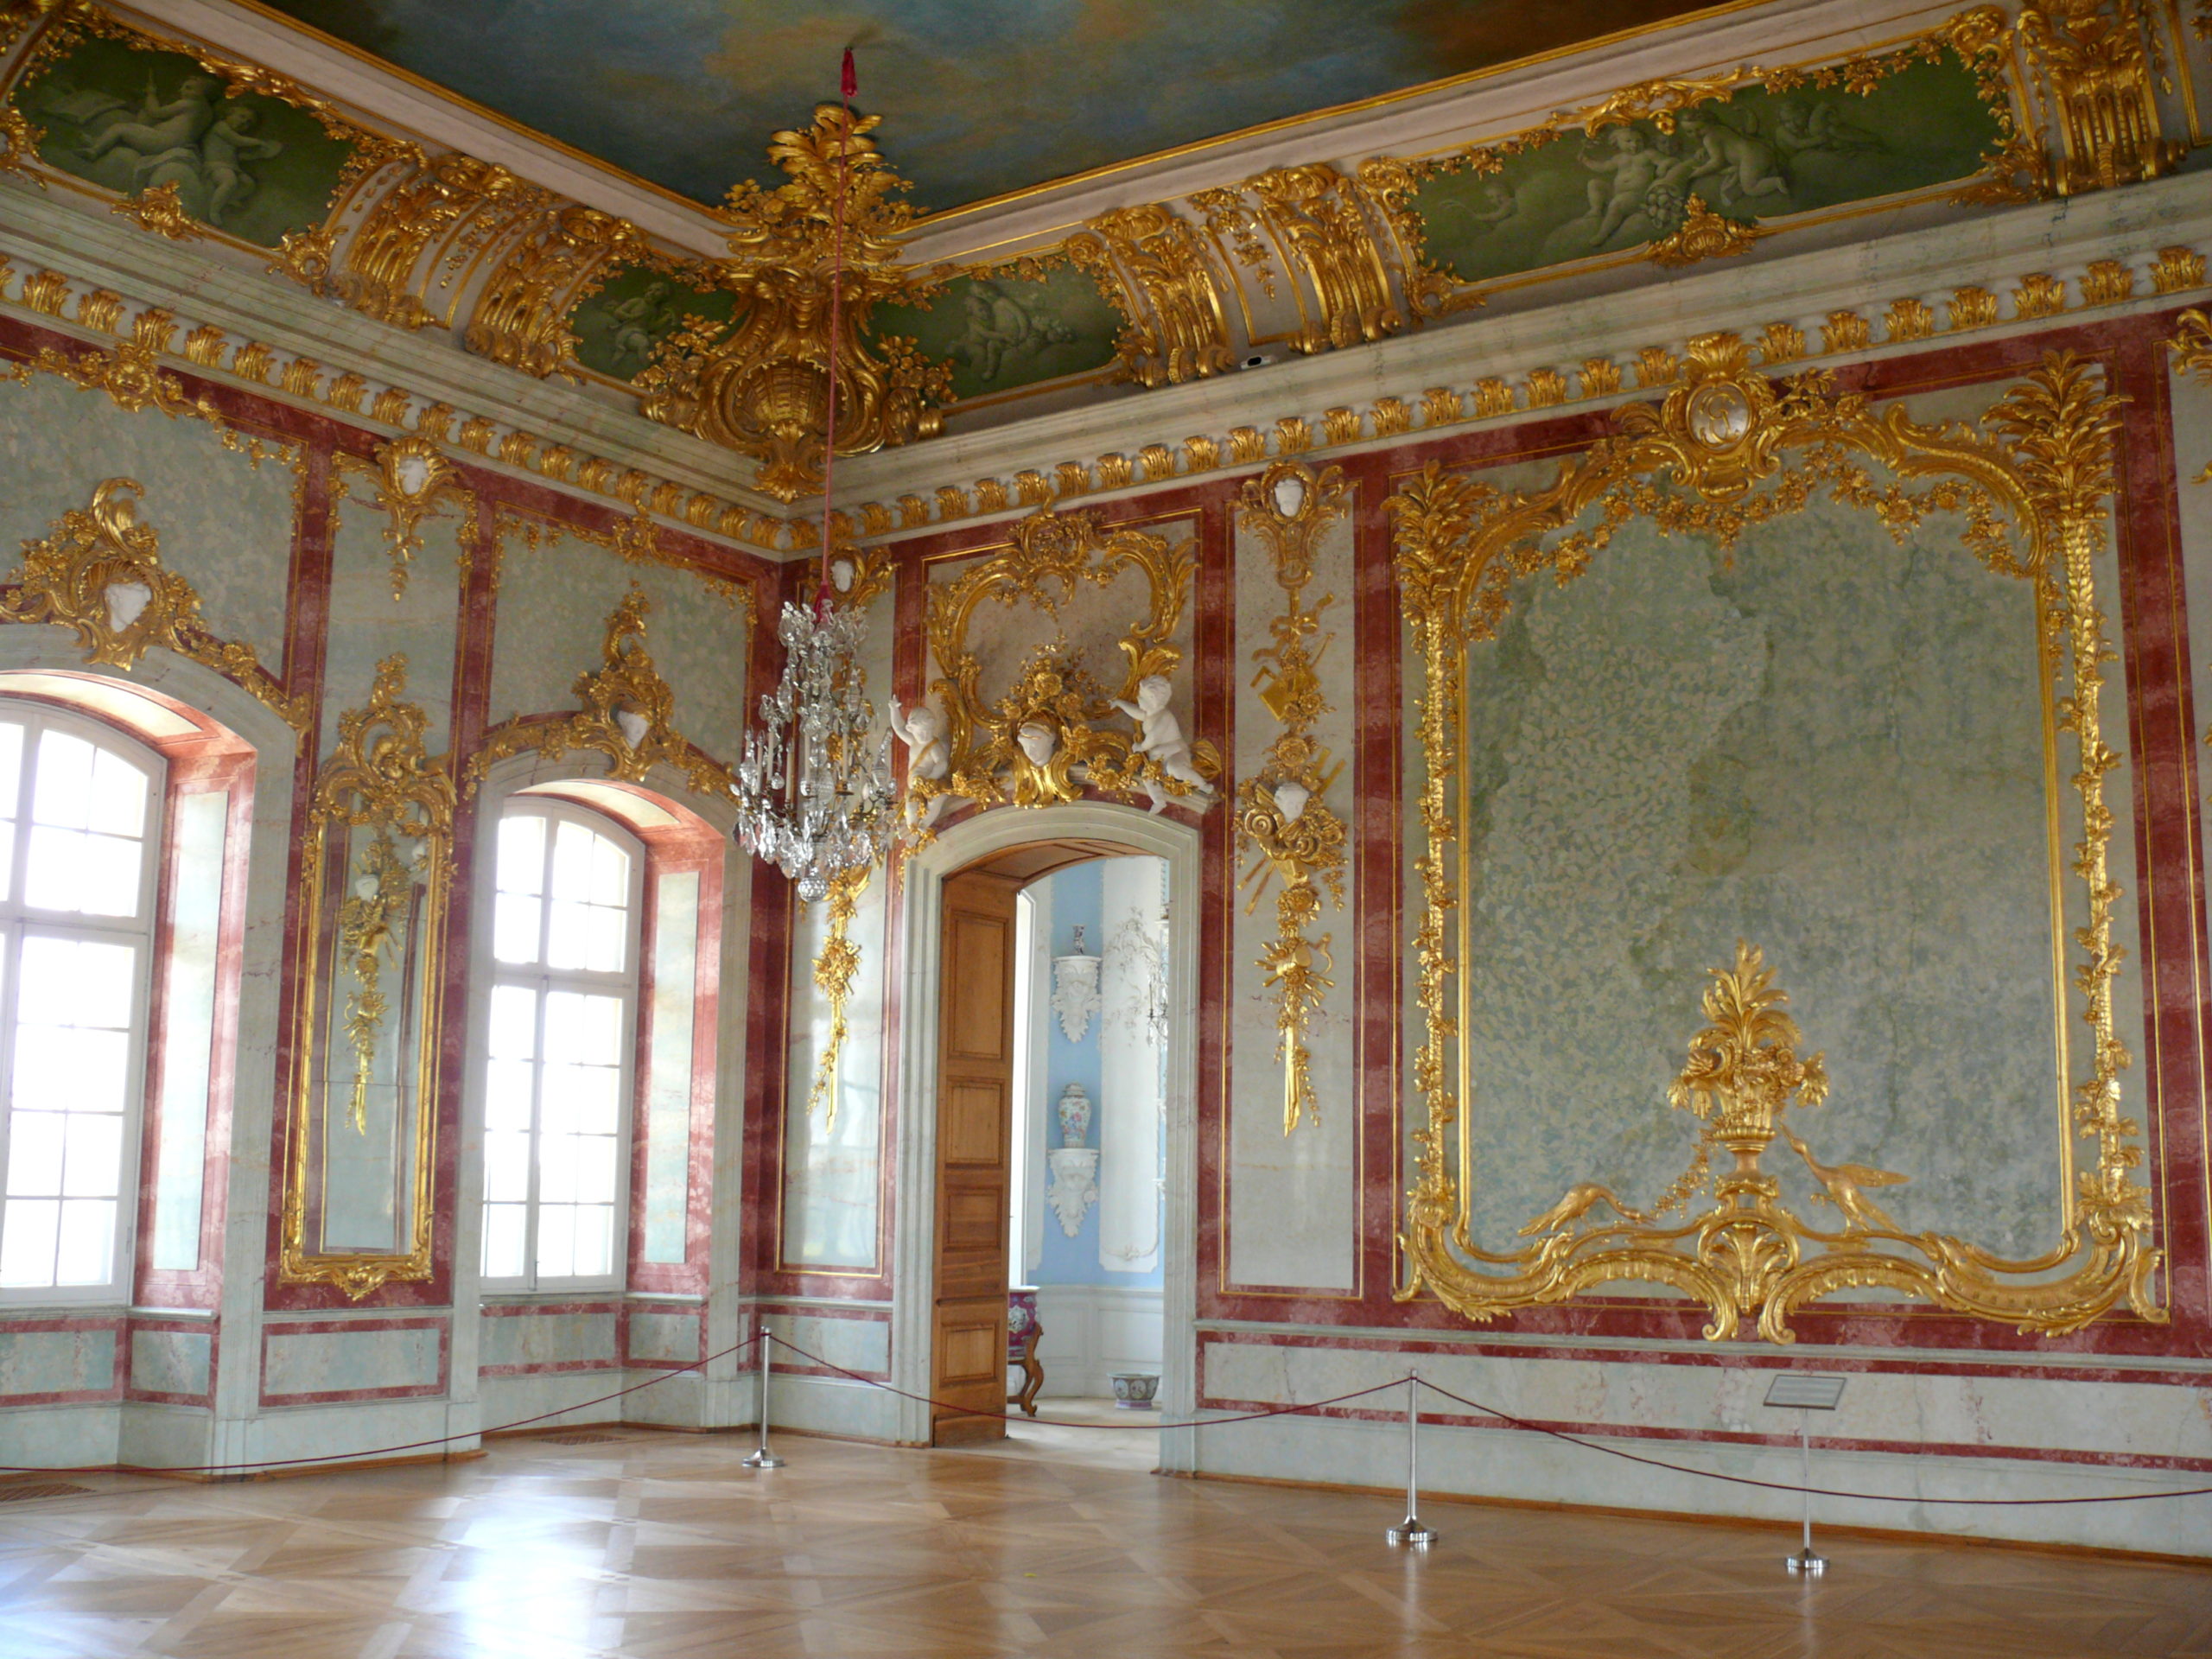 Rundāle Palace: the hidden gem of Latvia